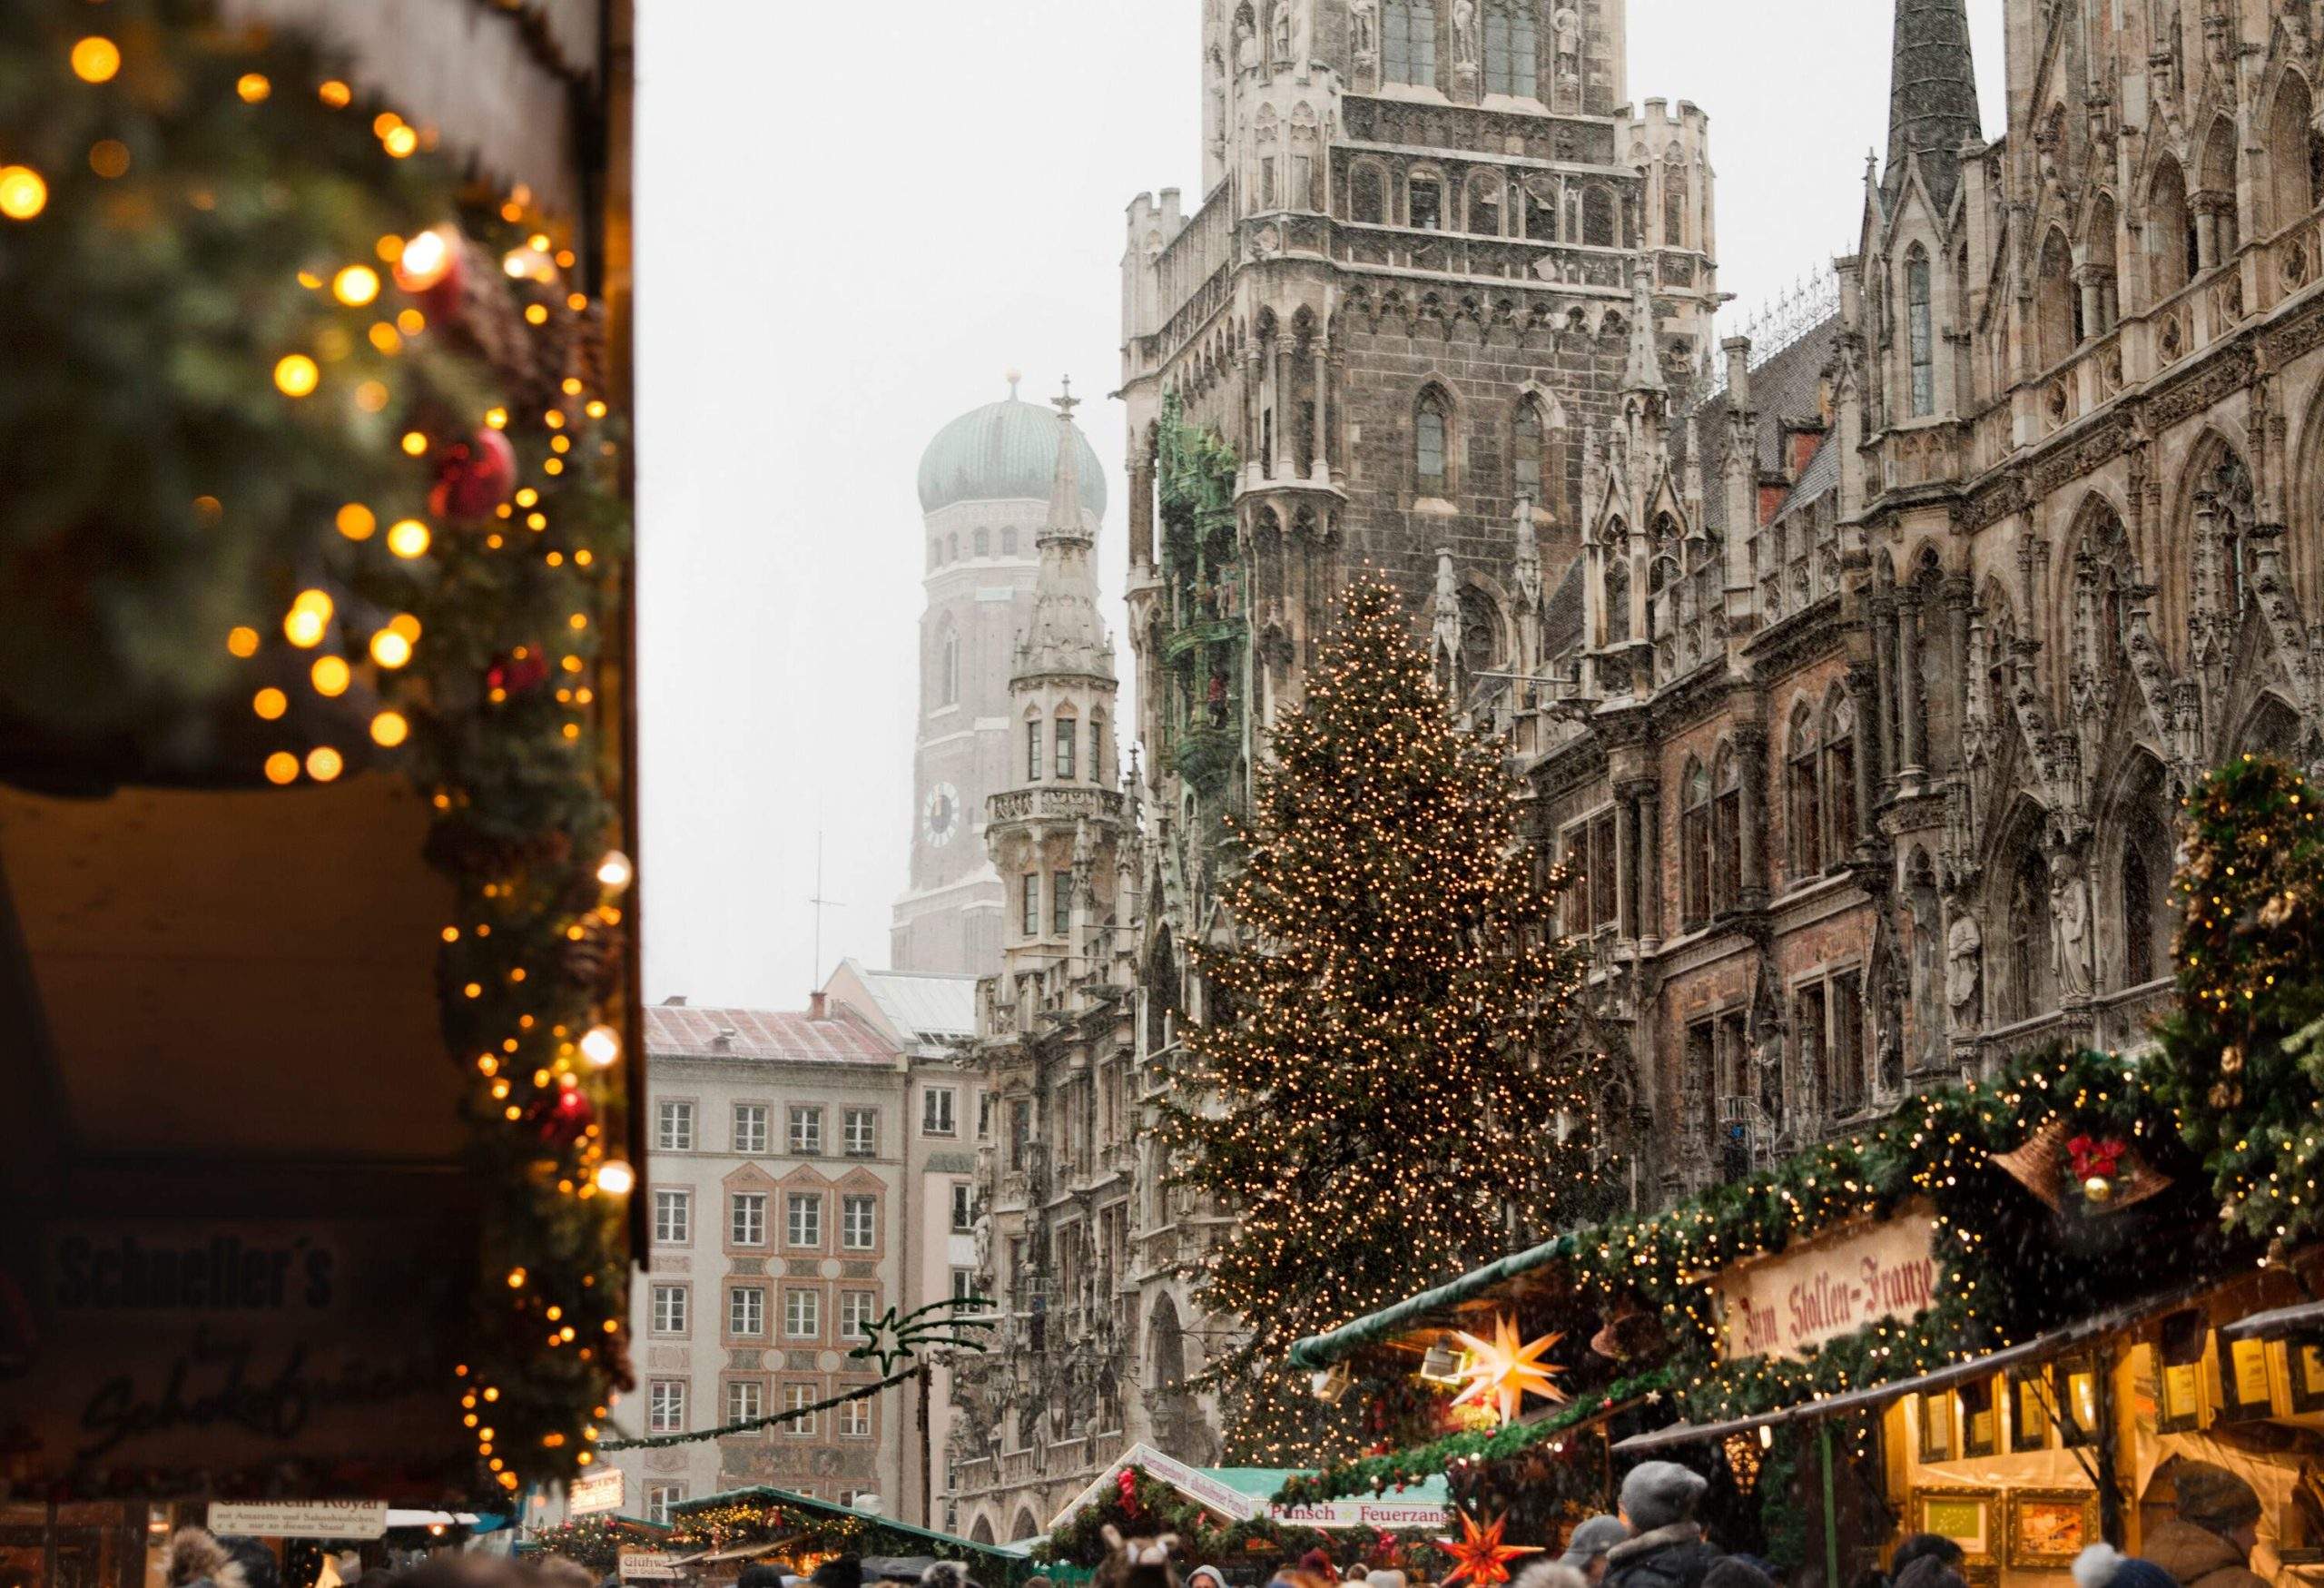 Christmas market, Marienplatz, Munich, Germany.